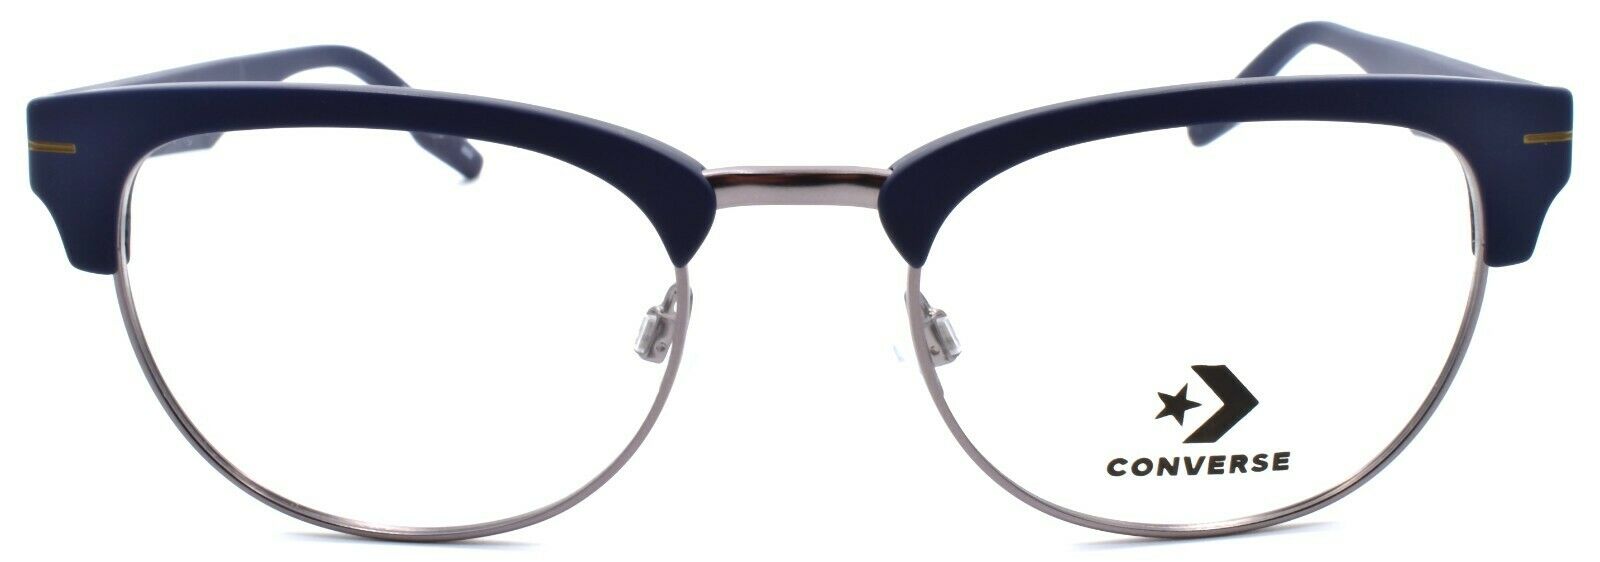 2-CONVERSE CV3006 411 Men's Eyeglasses Frames 52-20-145 Matte Obsidian-886895508070-IKSpecs